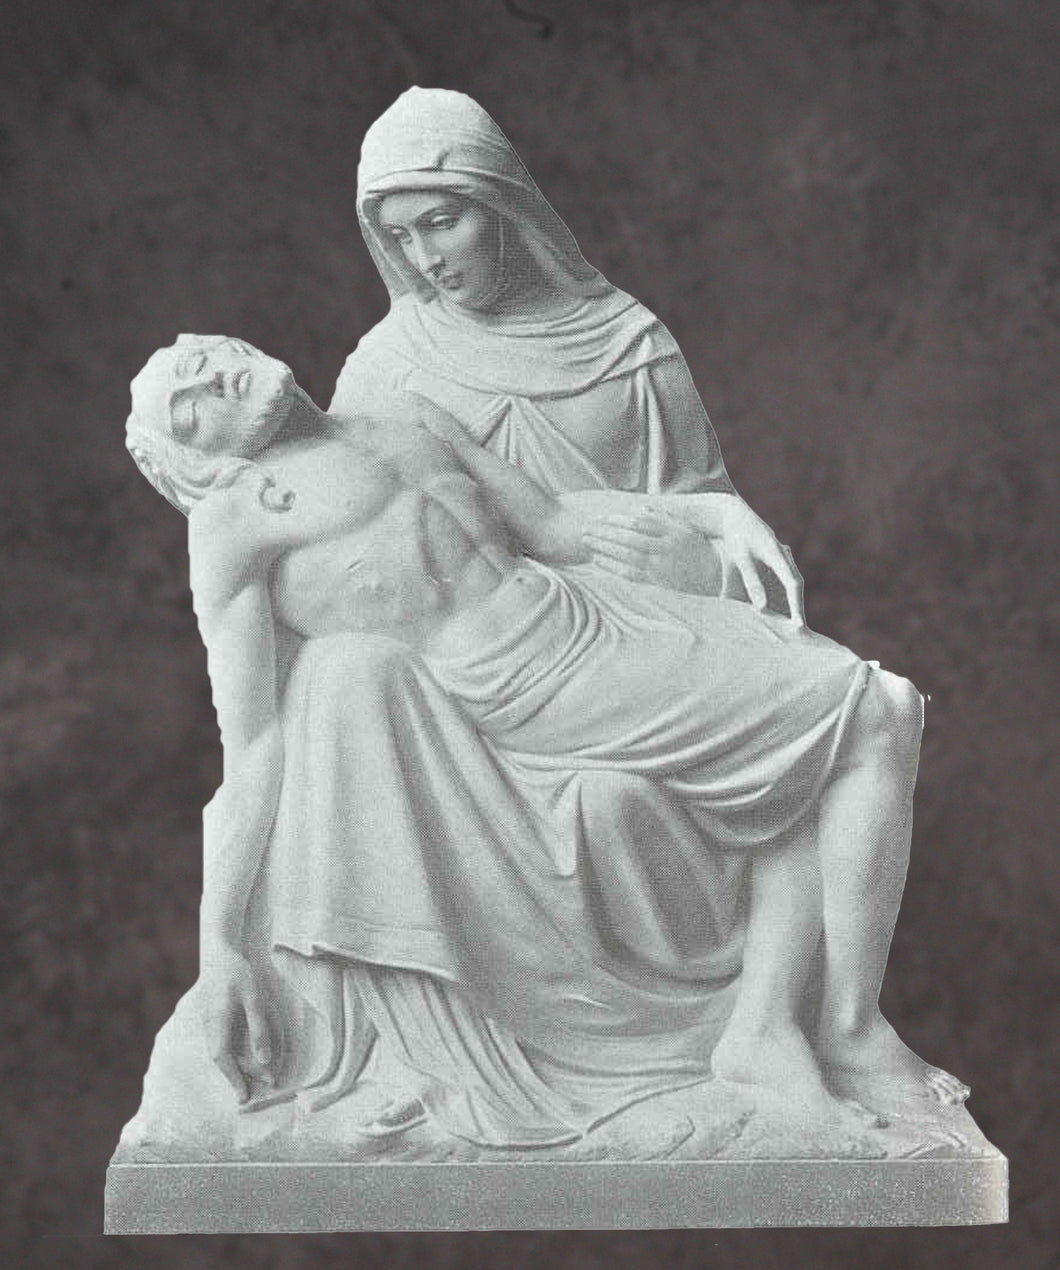 Life Size Pieta Statue by De De Prato in Solid Marble - 60”H